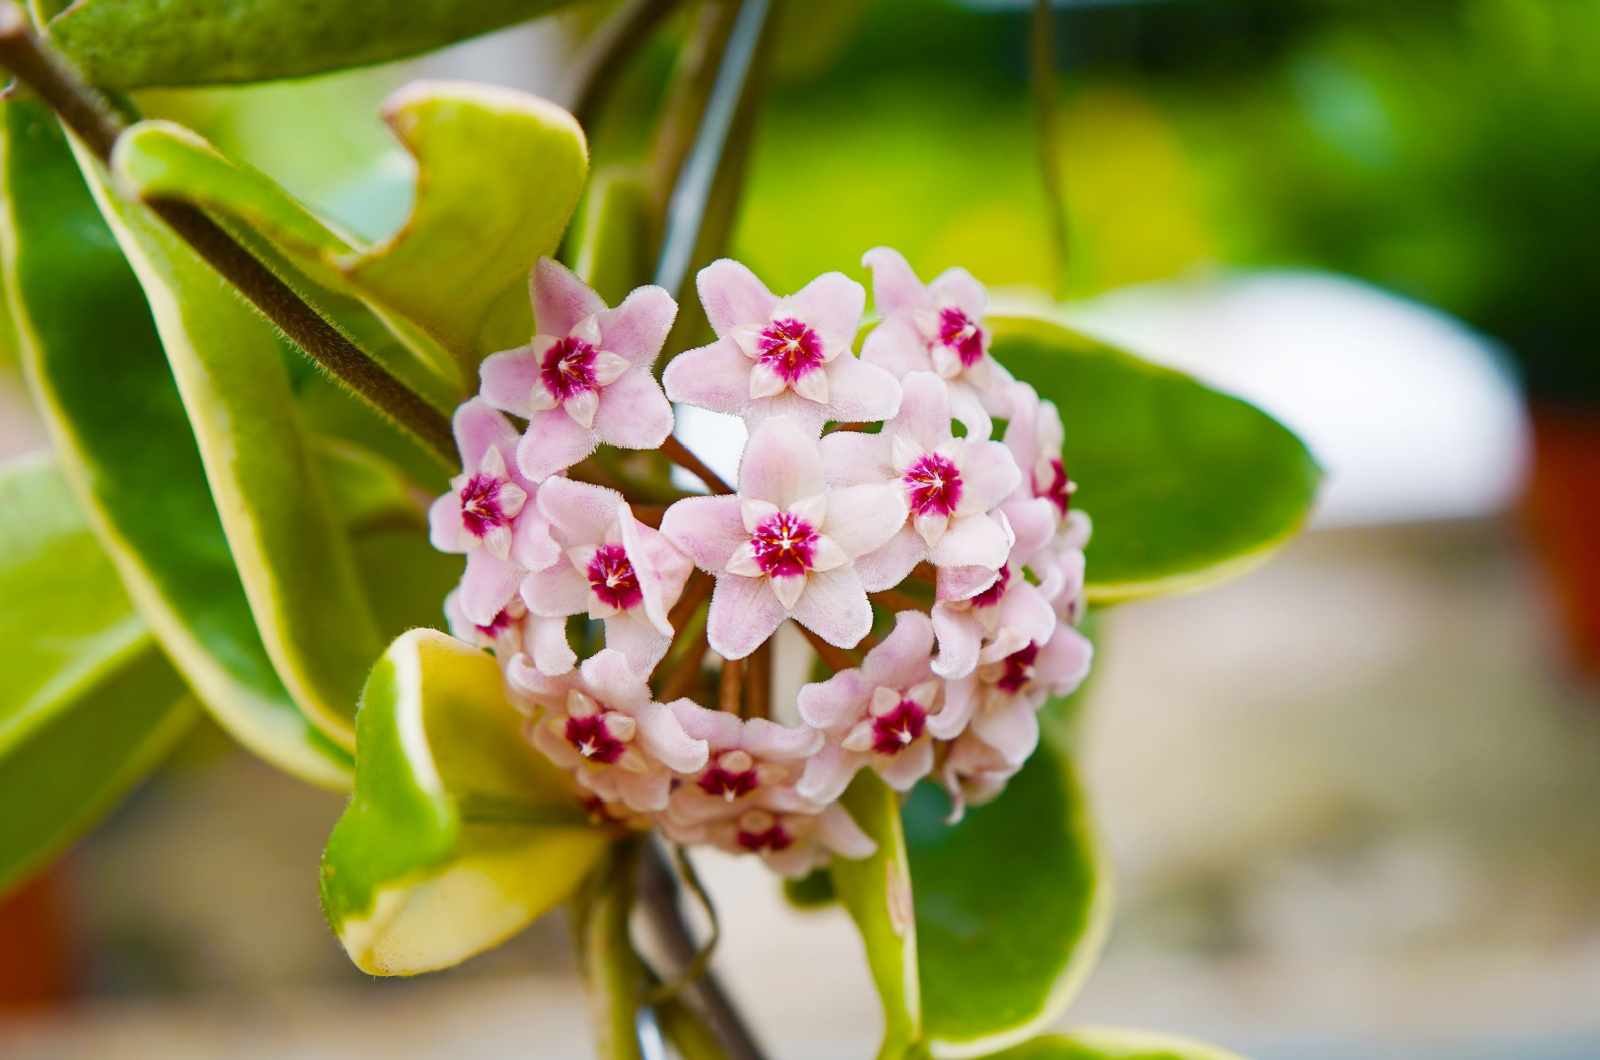 Hoya carnosa bloom